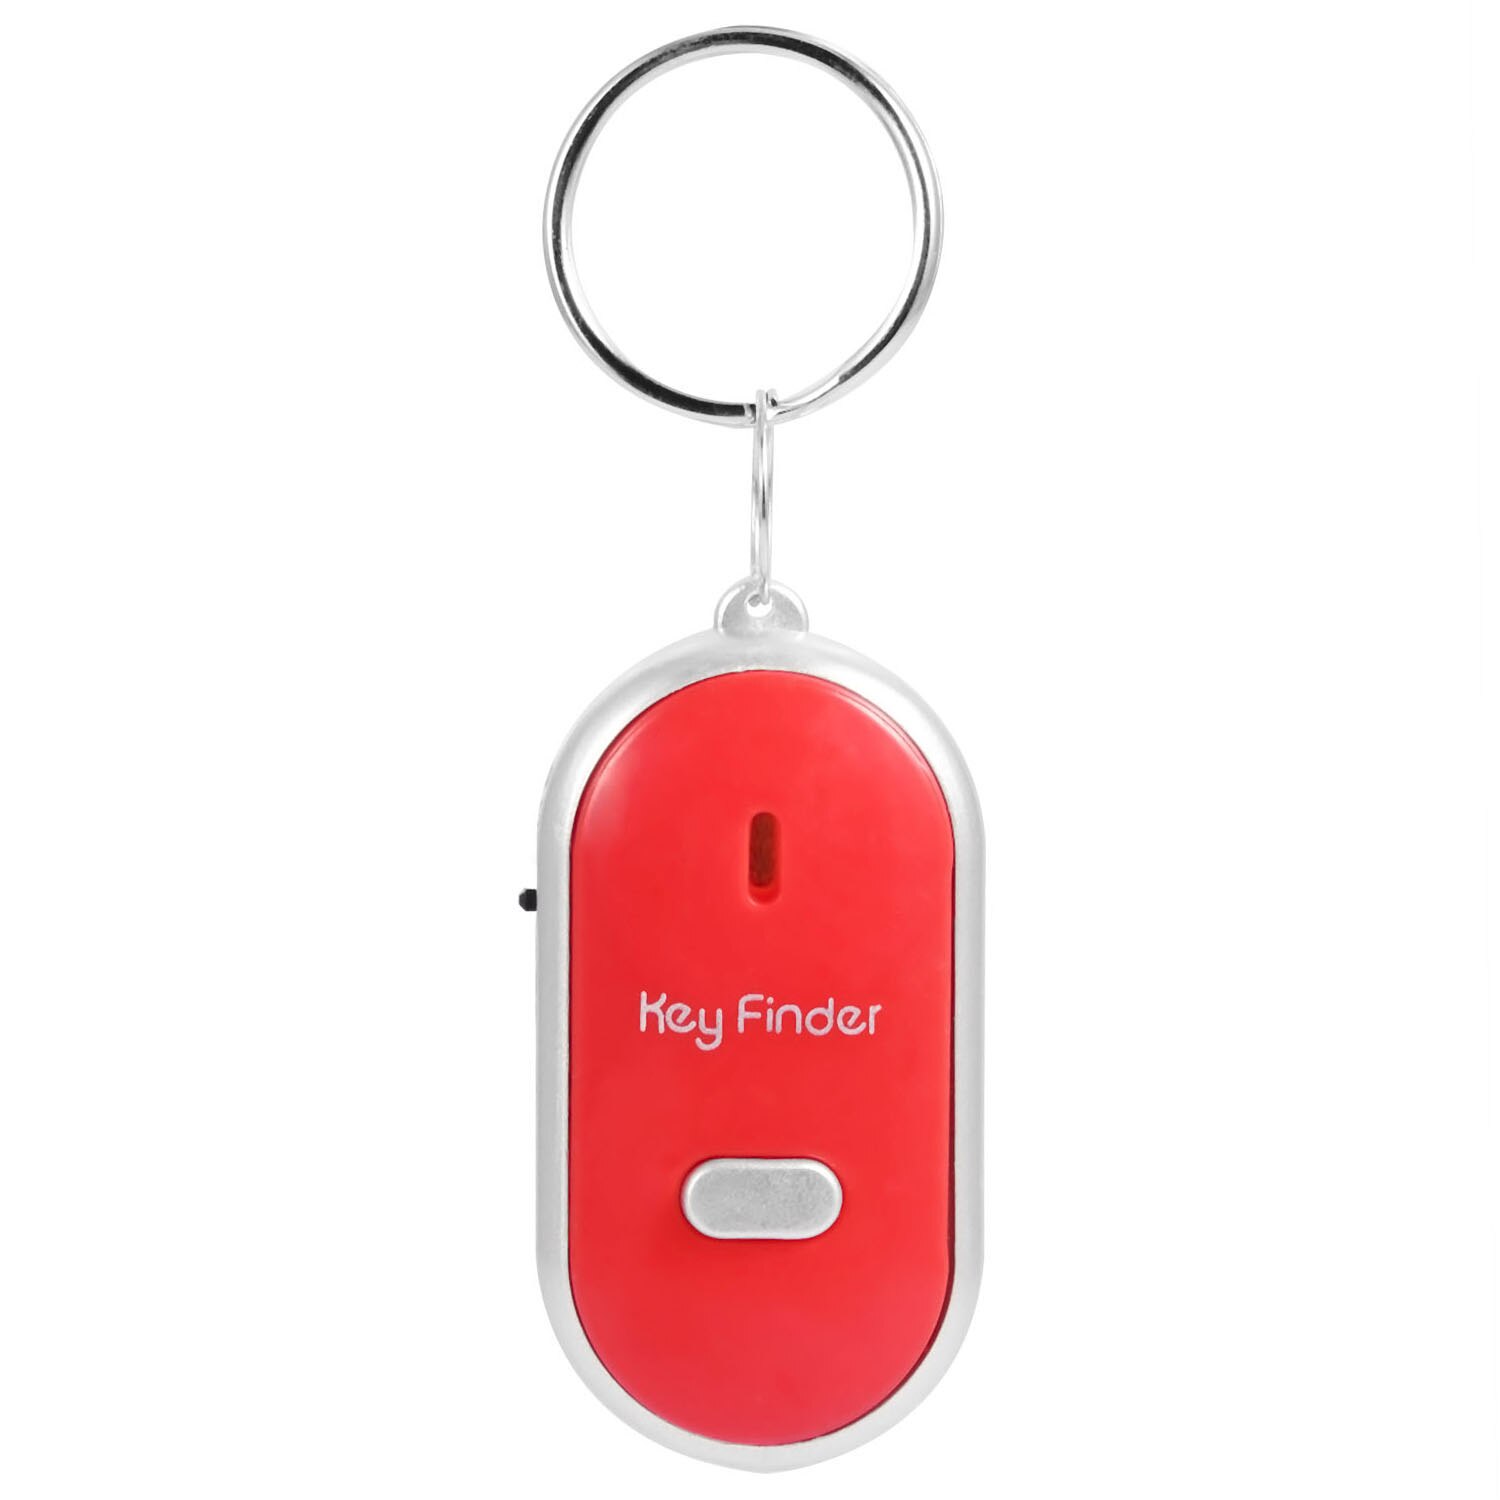 Led Fluitje Key Finder Knipperende Piepend Geluid Controle Alarm Anti-Verloren Keyfinder Locator Tracker Met Sleutelhanger